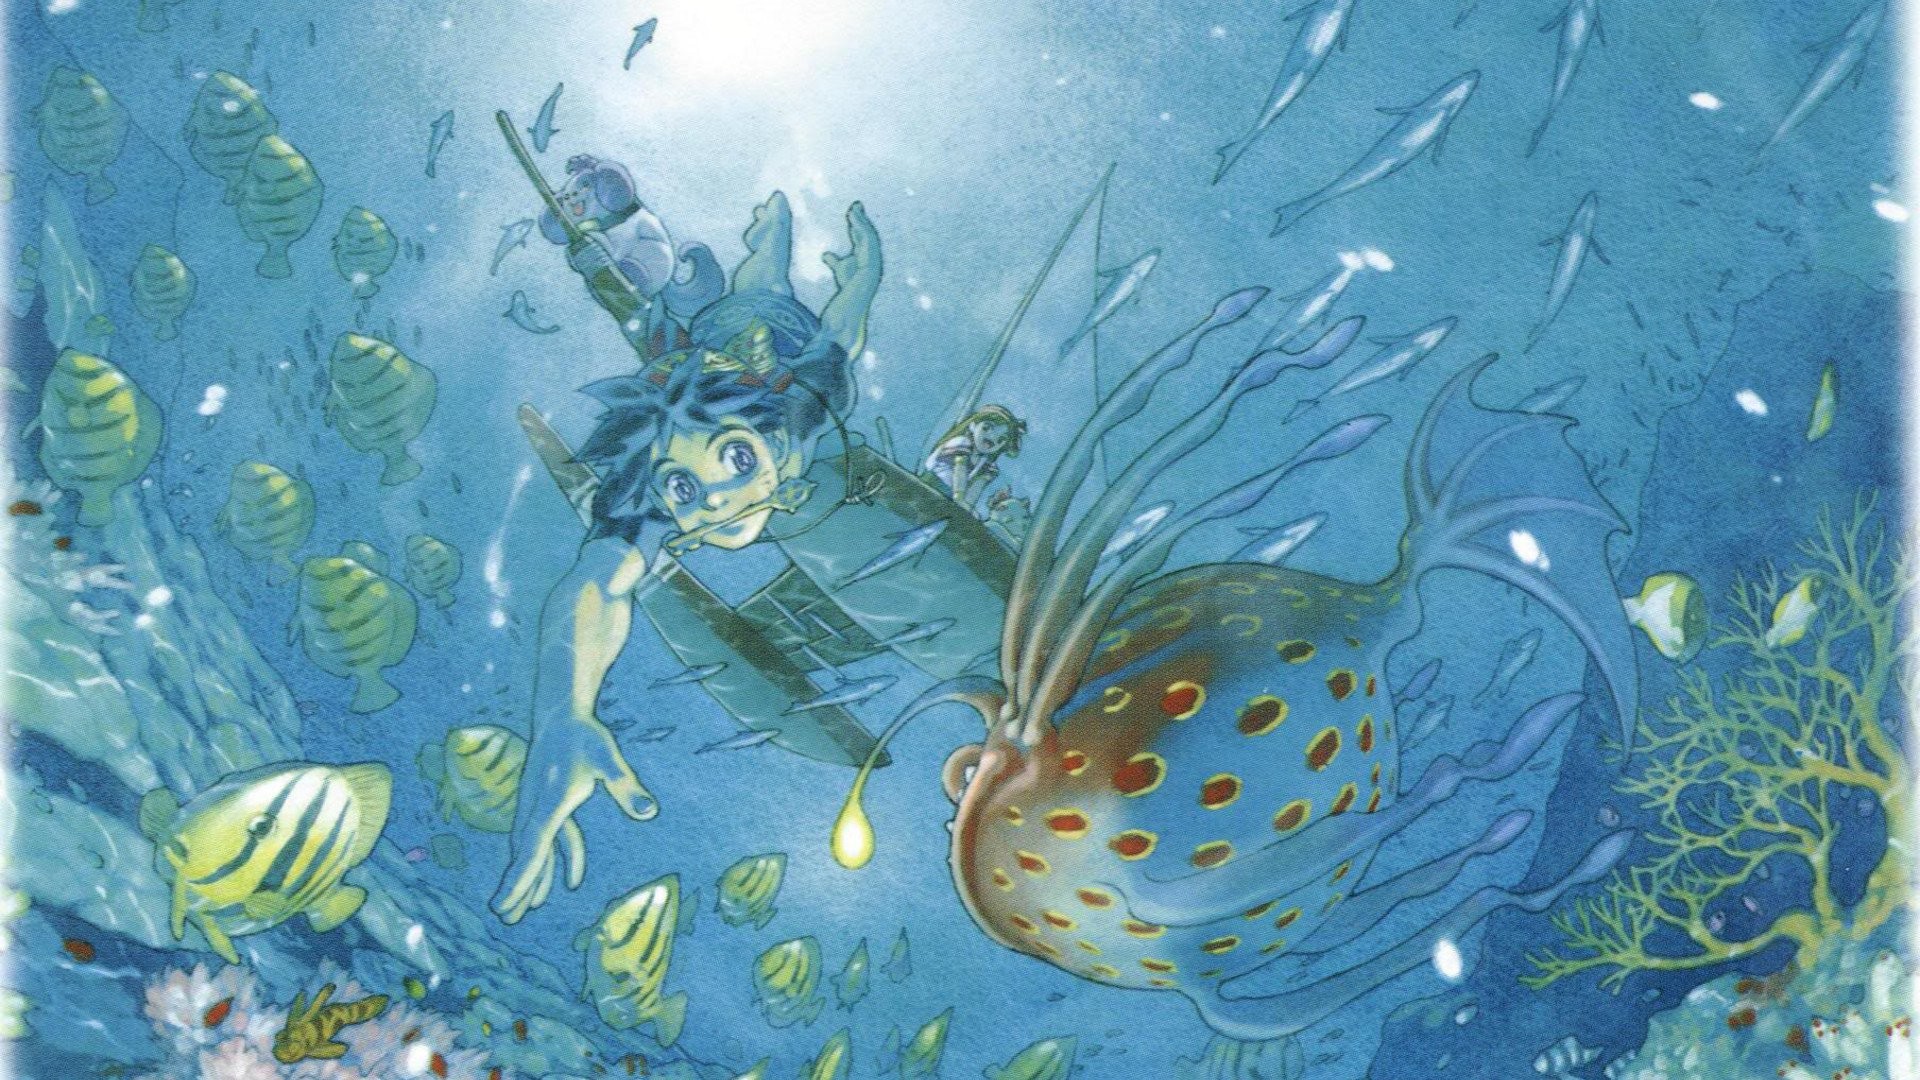 chrono cross wallpaper,marine biology,organism,underwater,illustration,fish